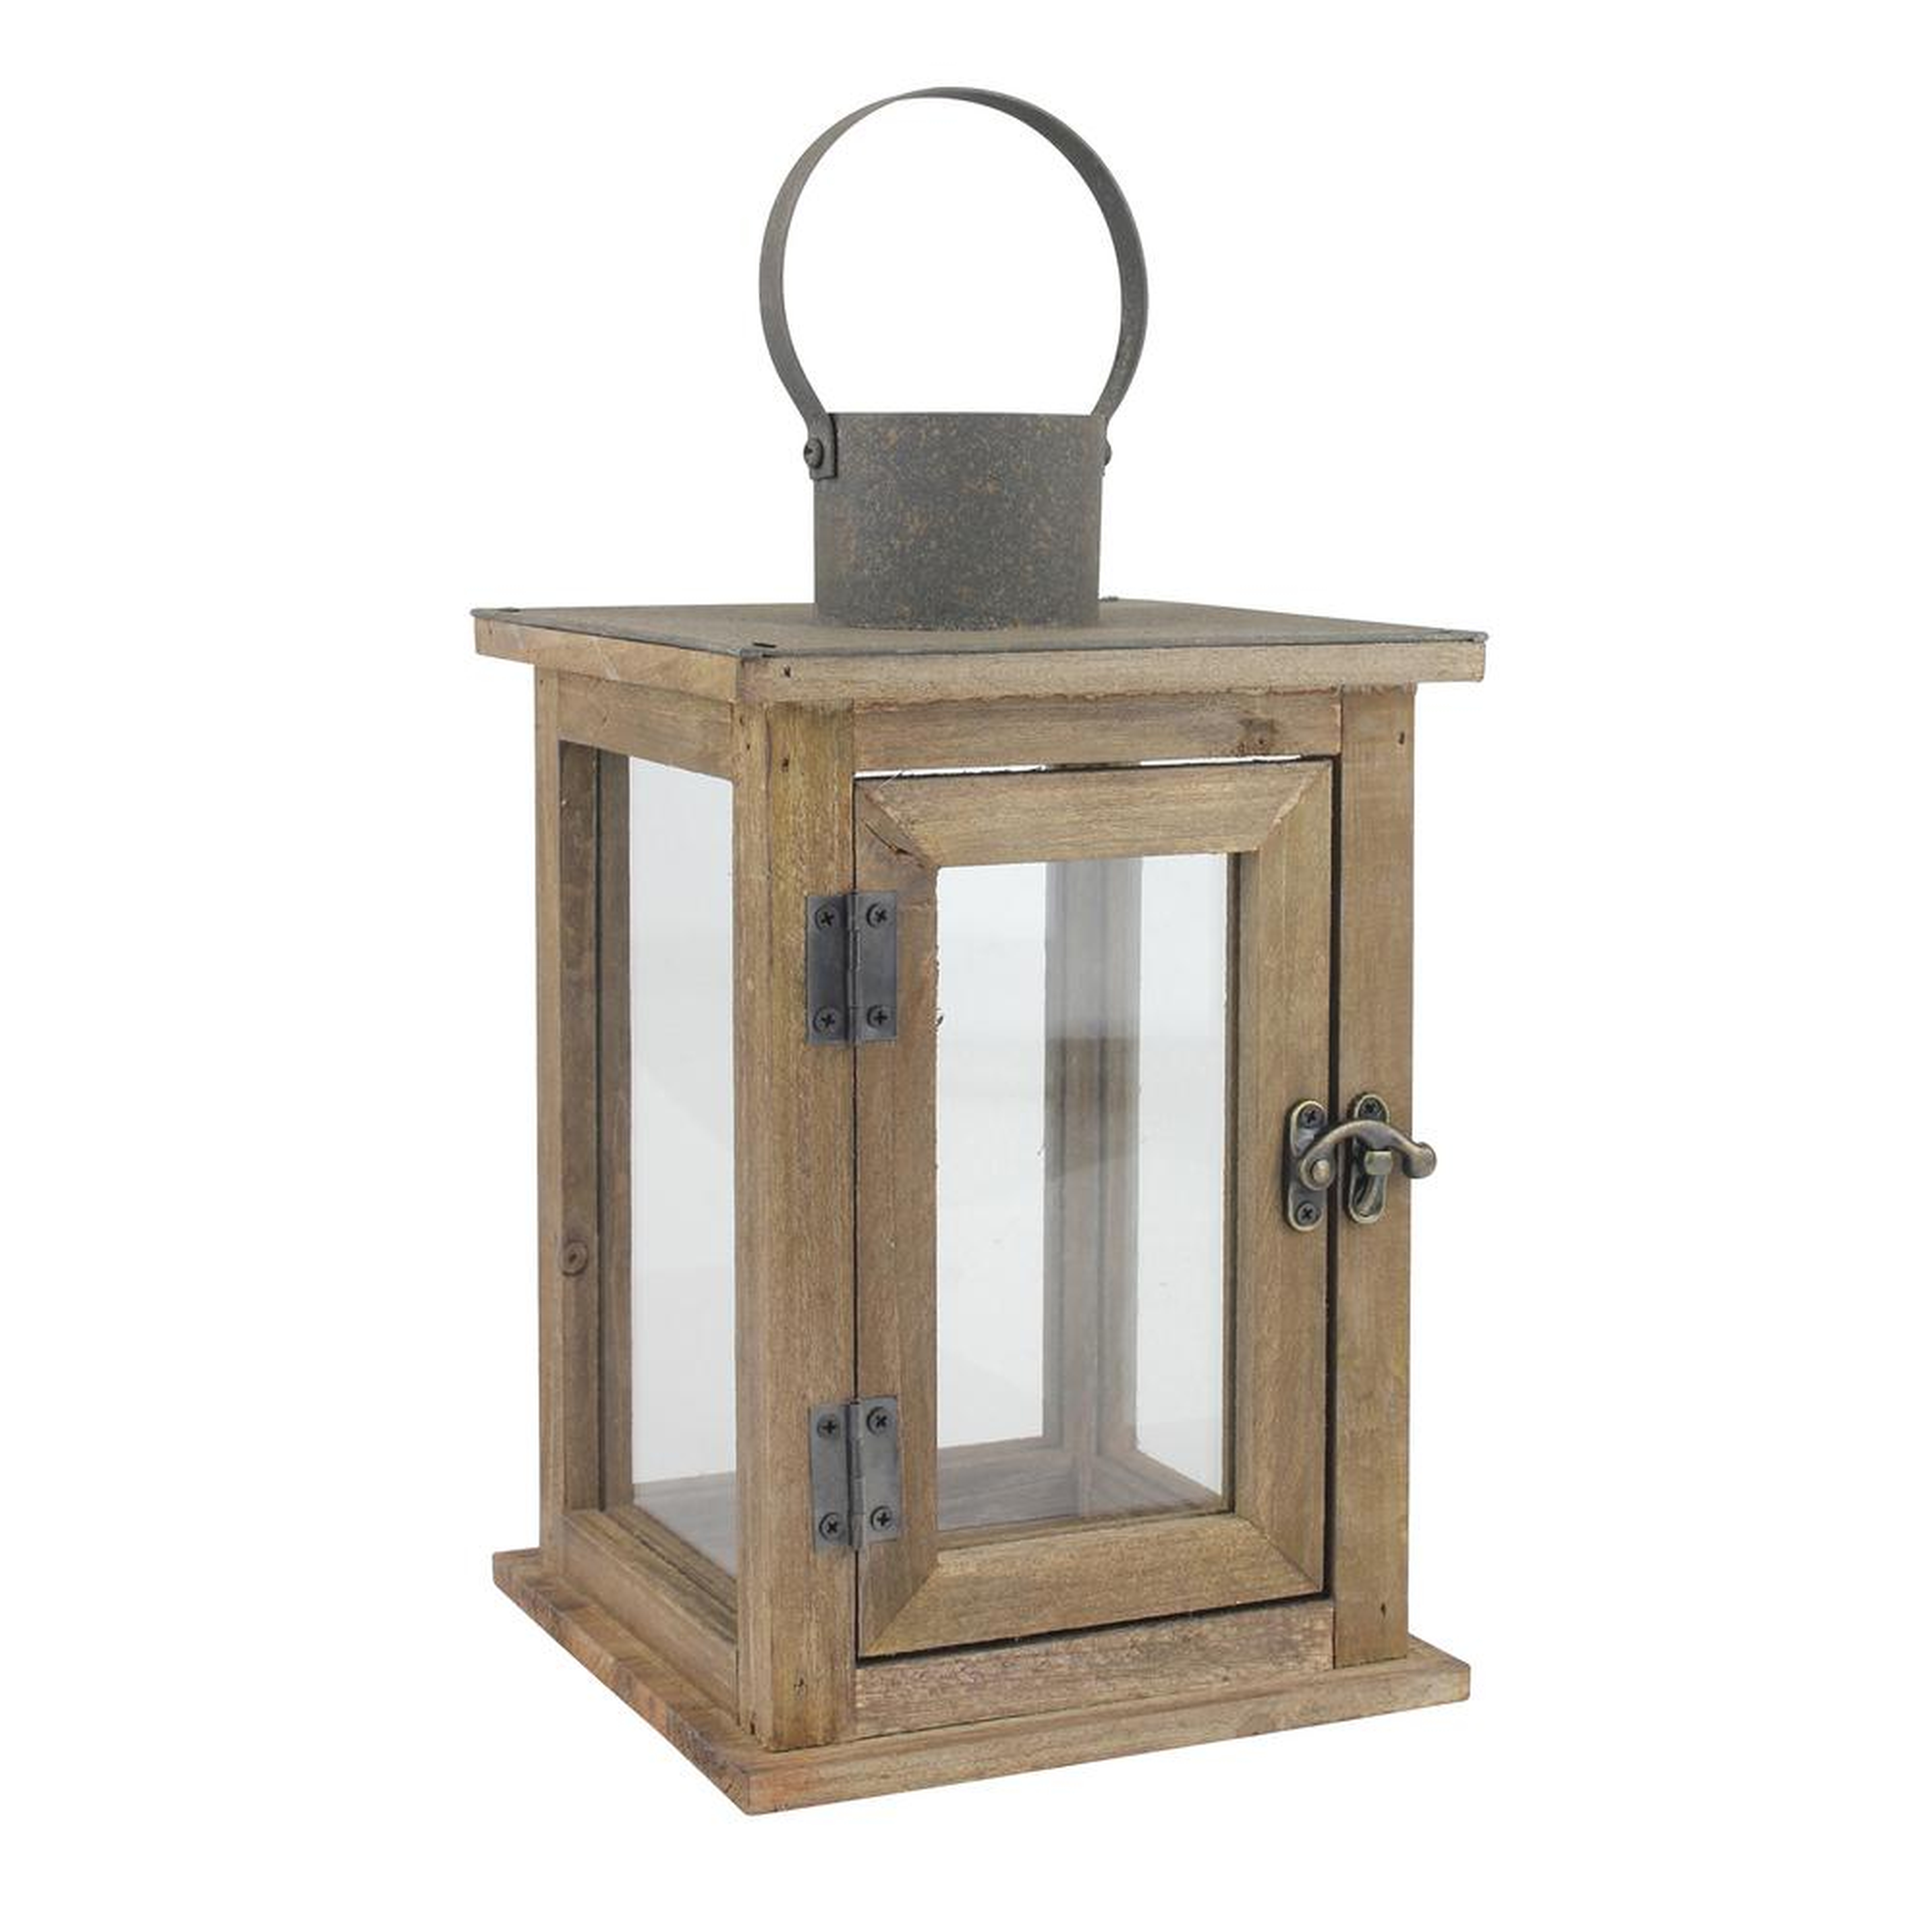 11" Rustic Wood Lantern - Home Depot